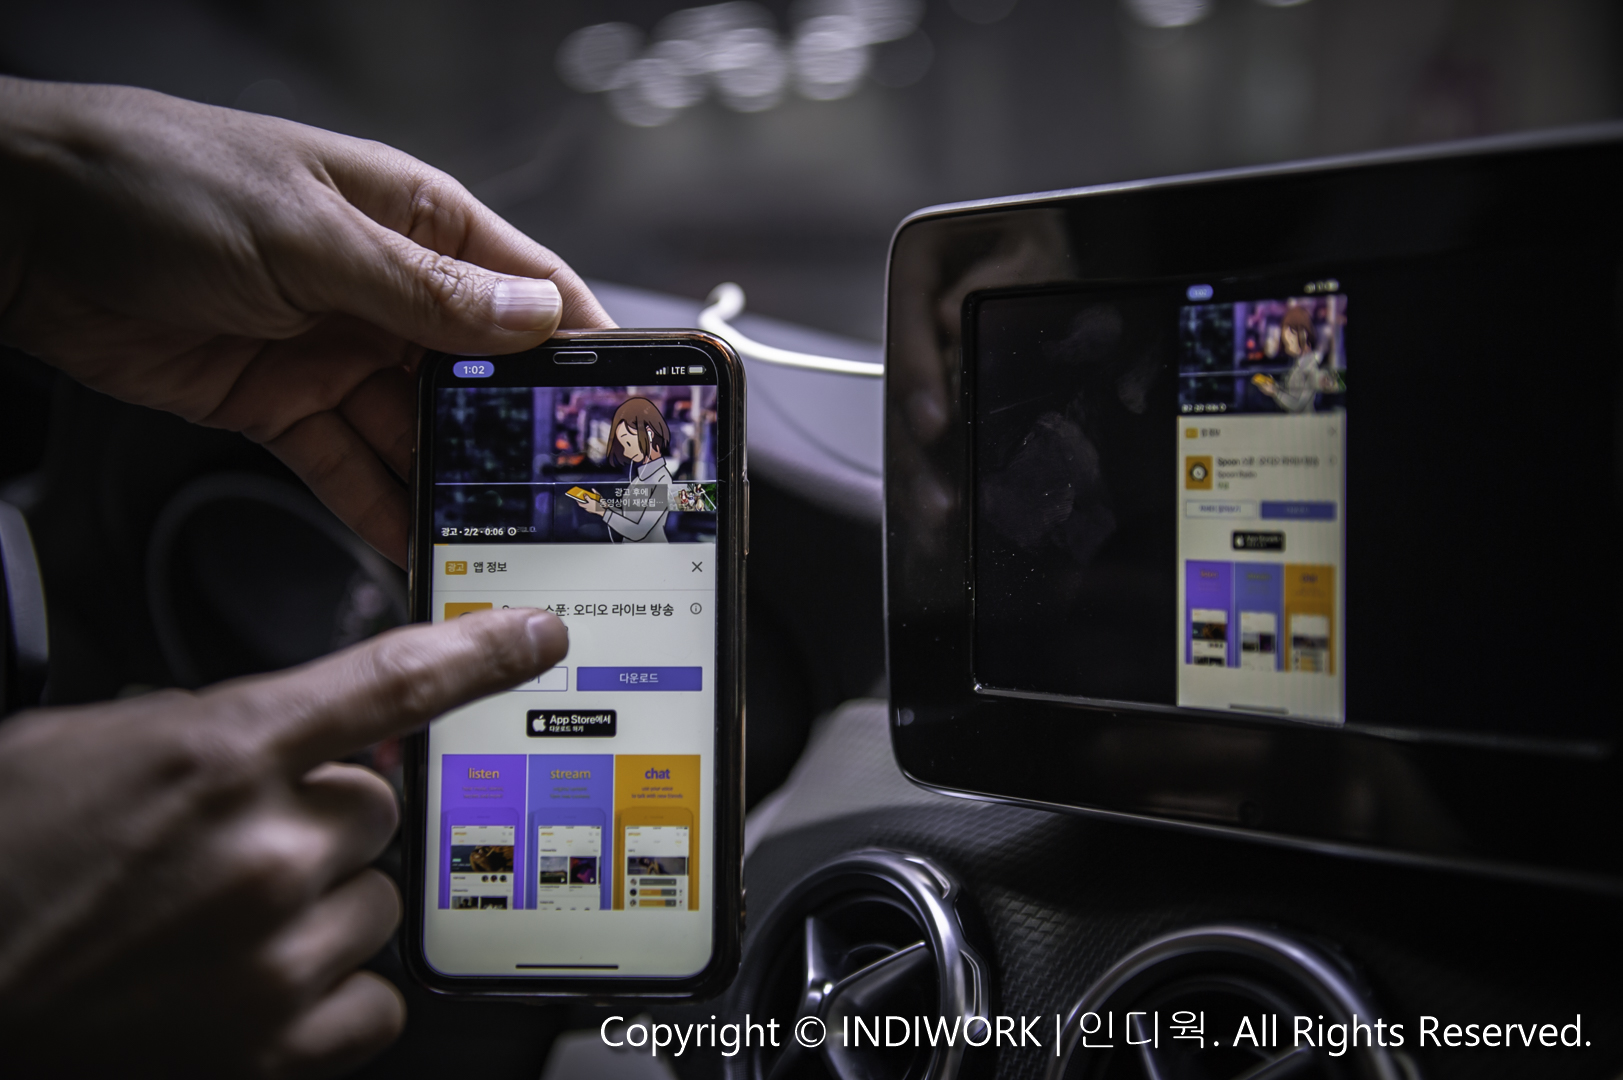 Apple CarPlay,smartphone mirroring for 2017 Mercedes GLA-Class "SCB-NTG5"